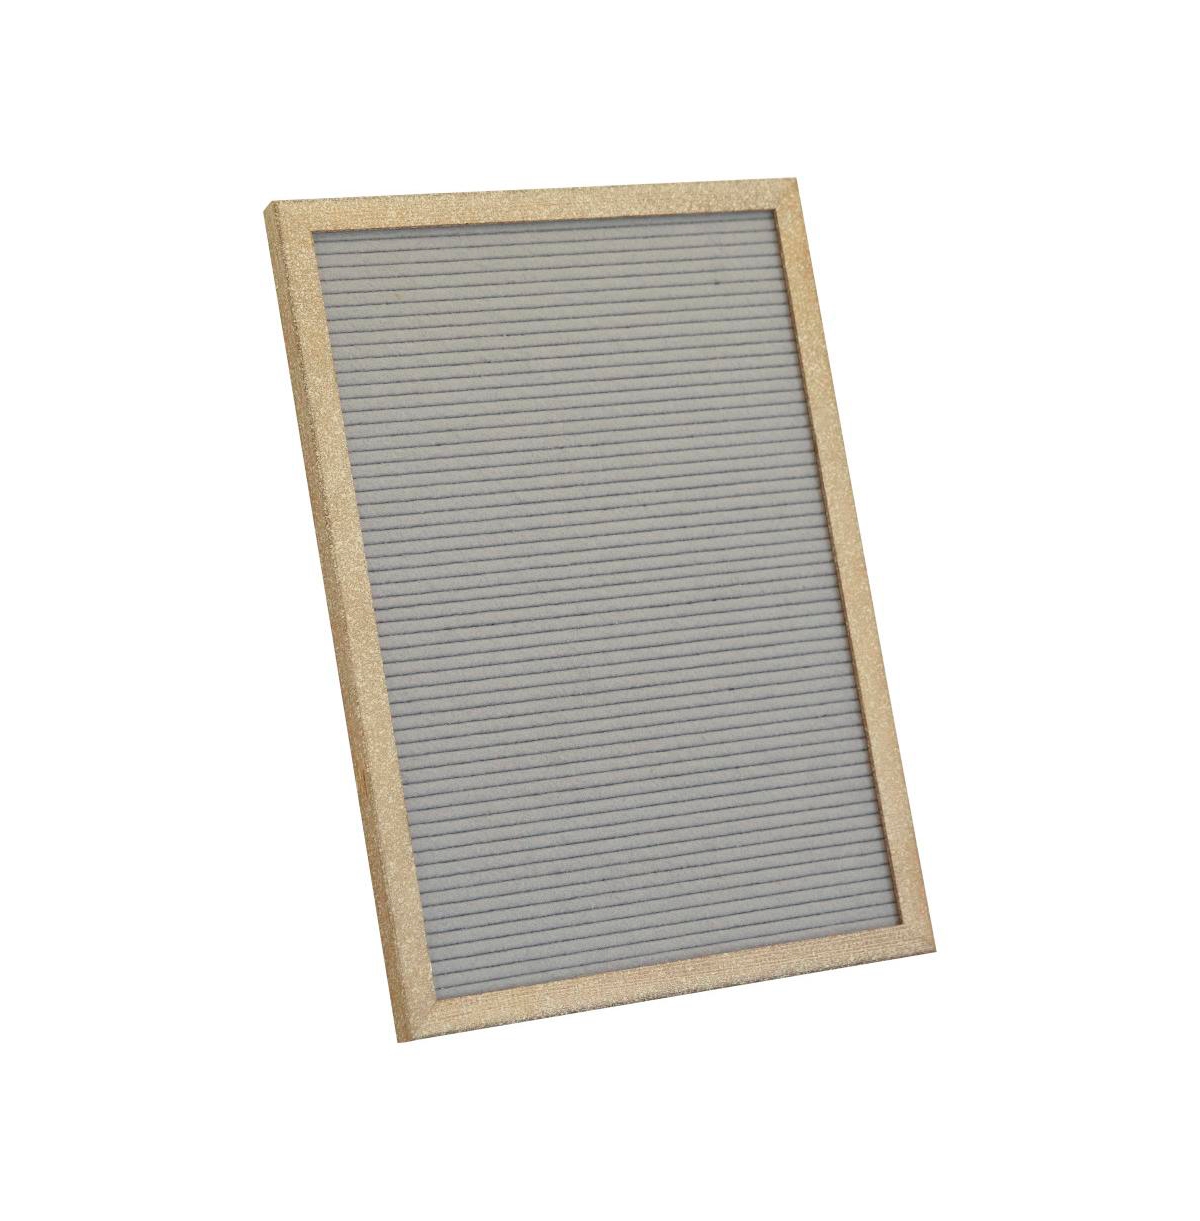 Bette 12" x 17" Wood and Felt Letter Board Set - Weathered wood frame/gray felt